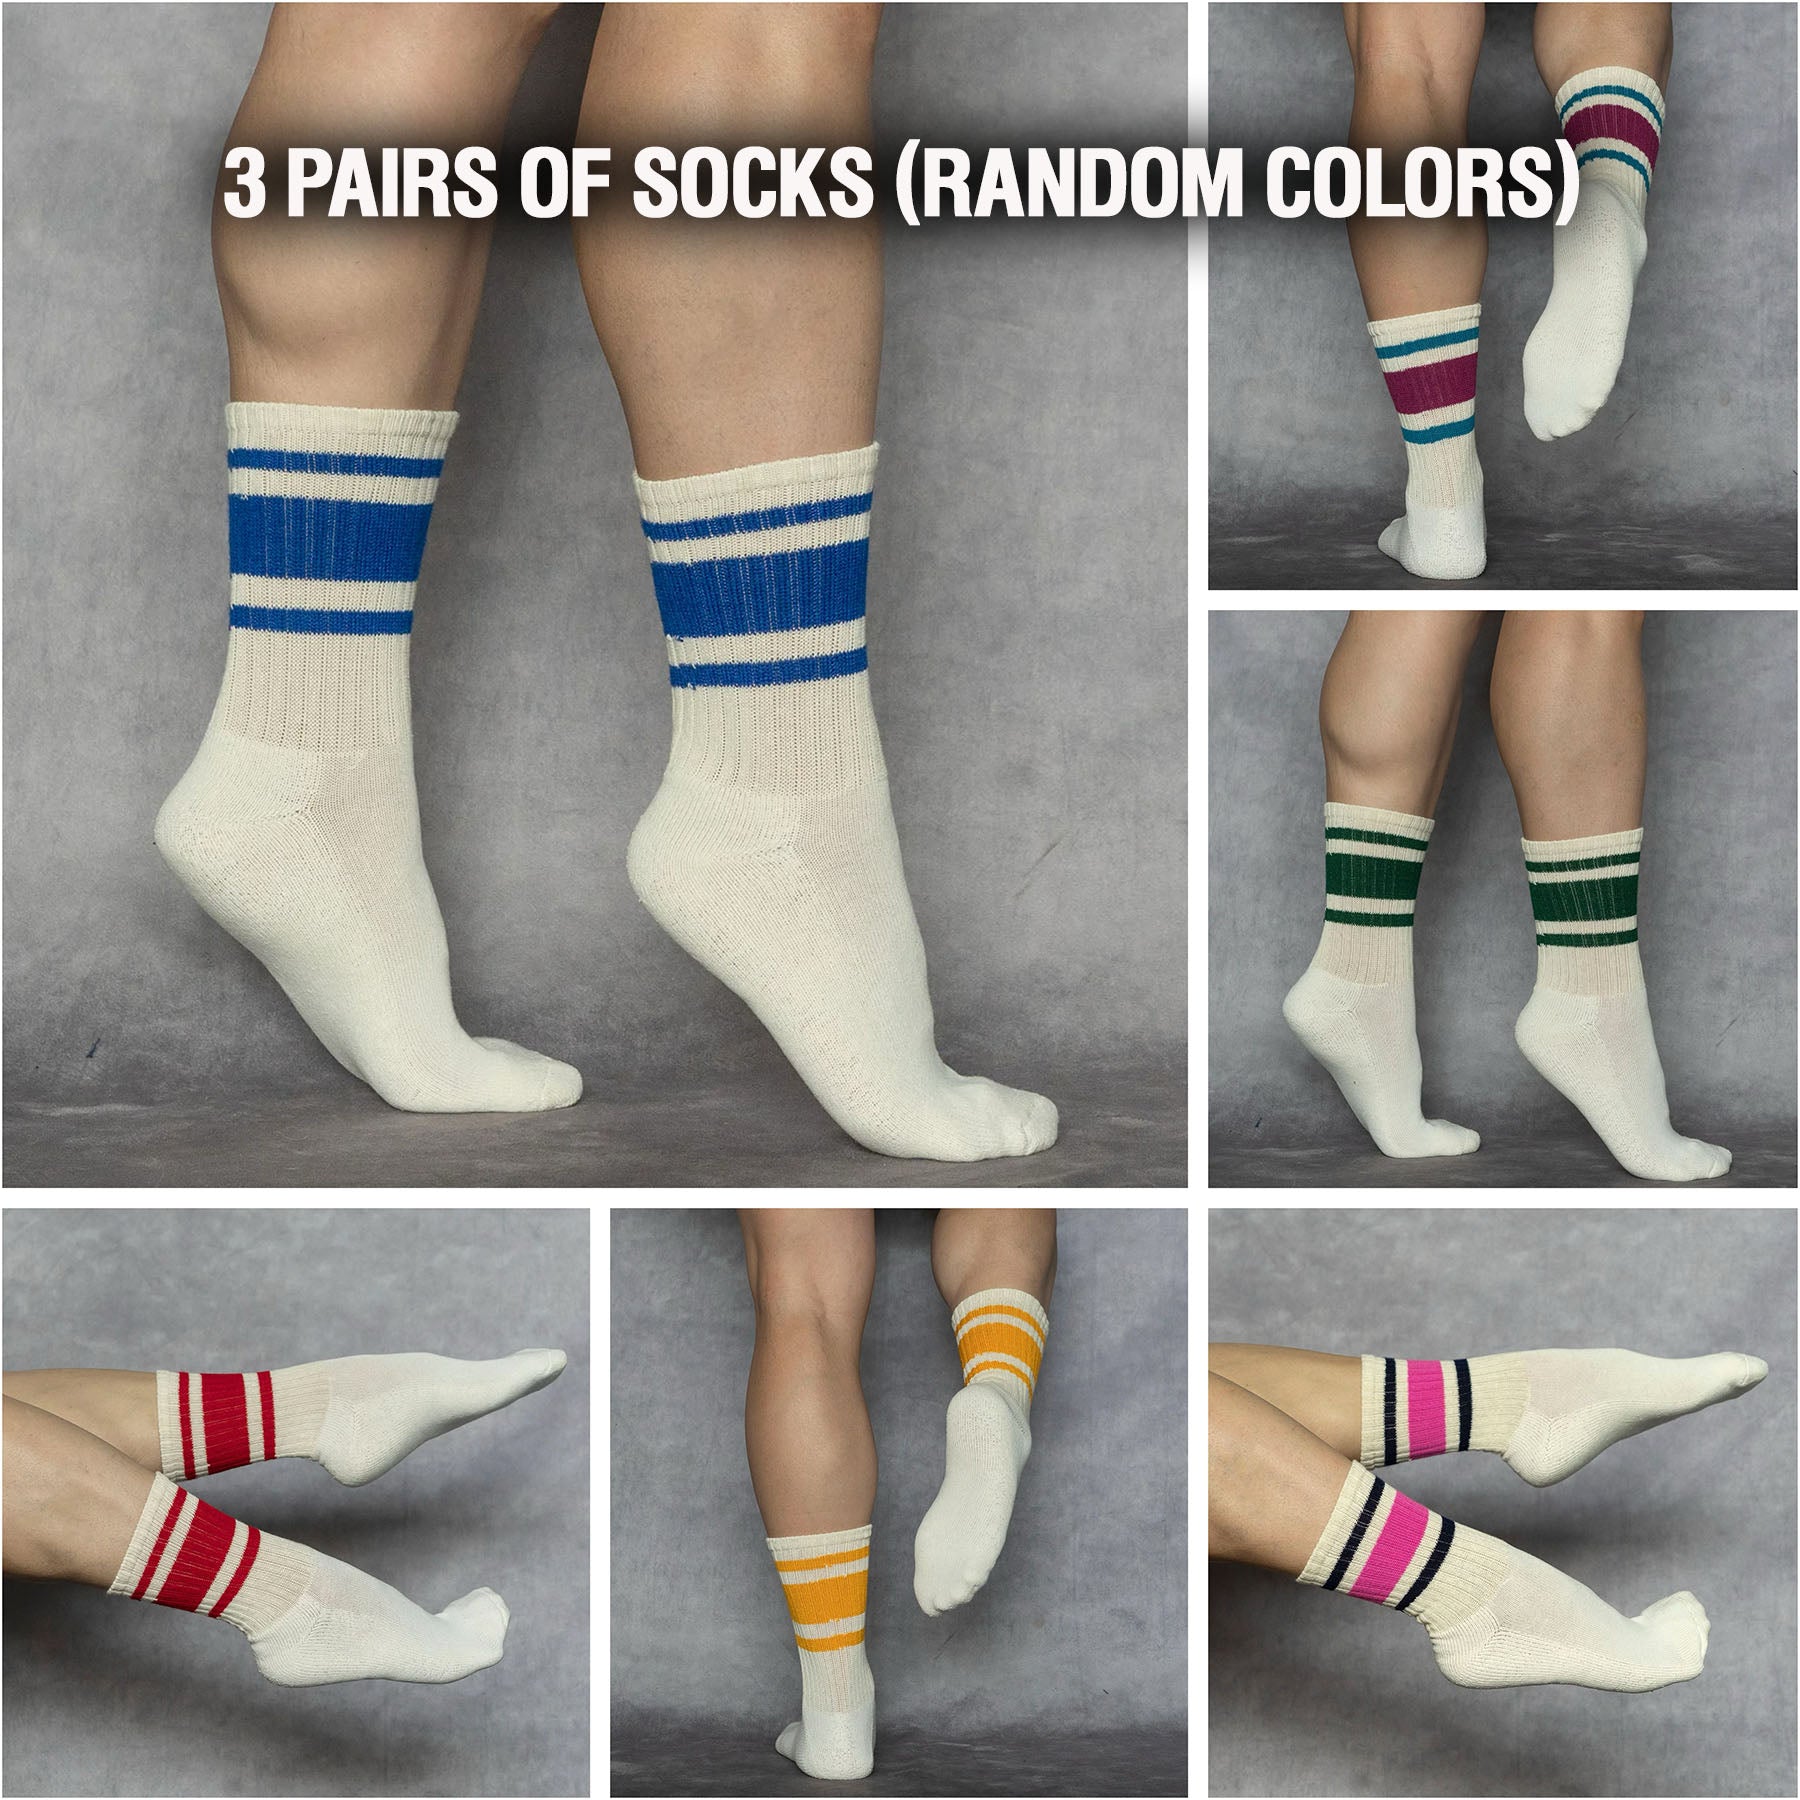 3-Piece Random Sock Bundle Deal (shipping included)